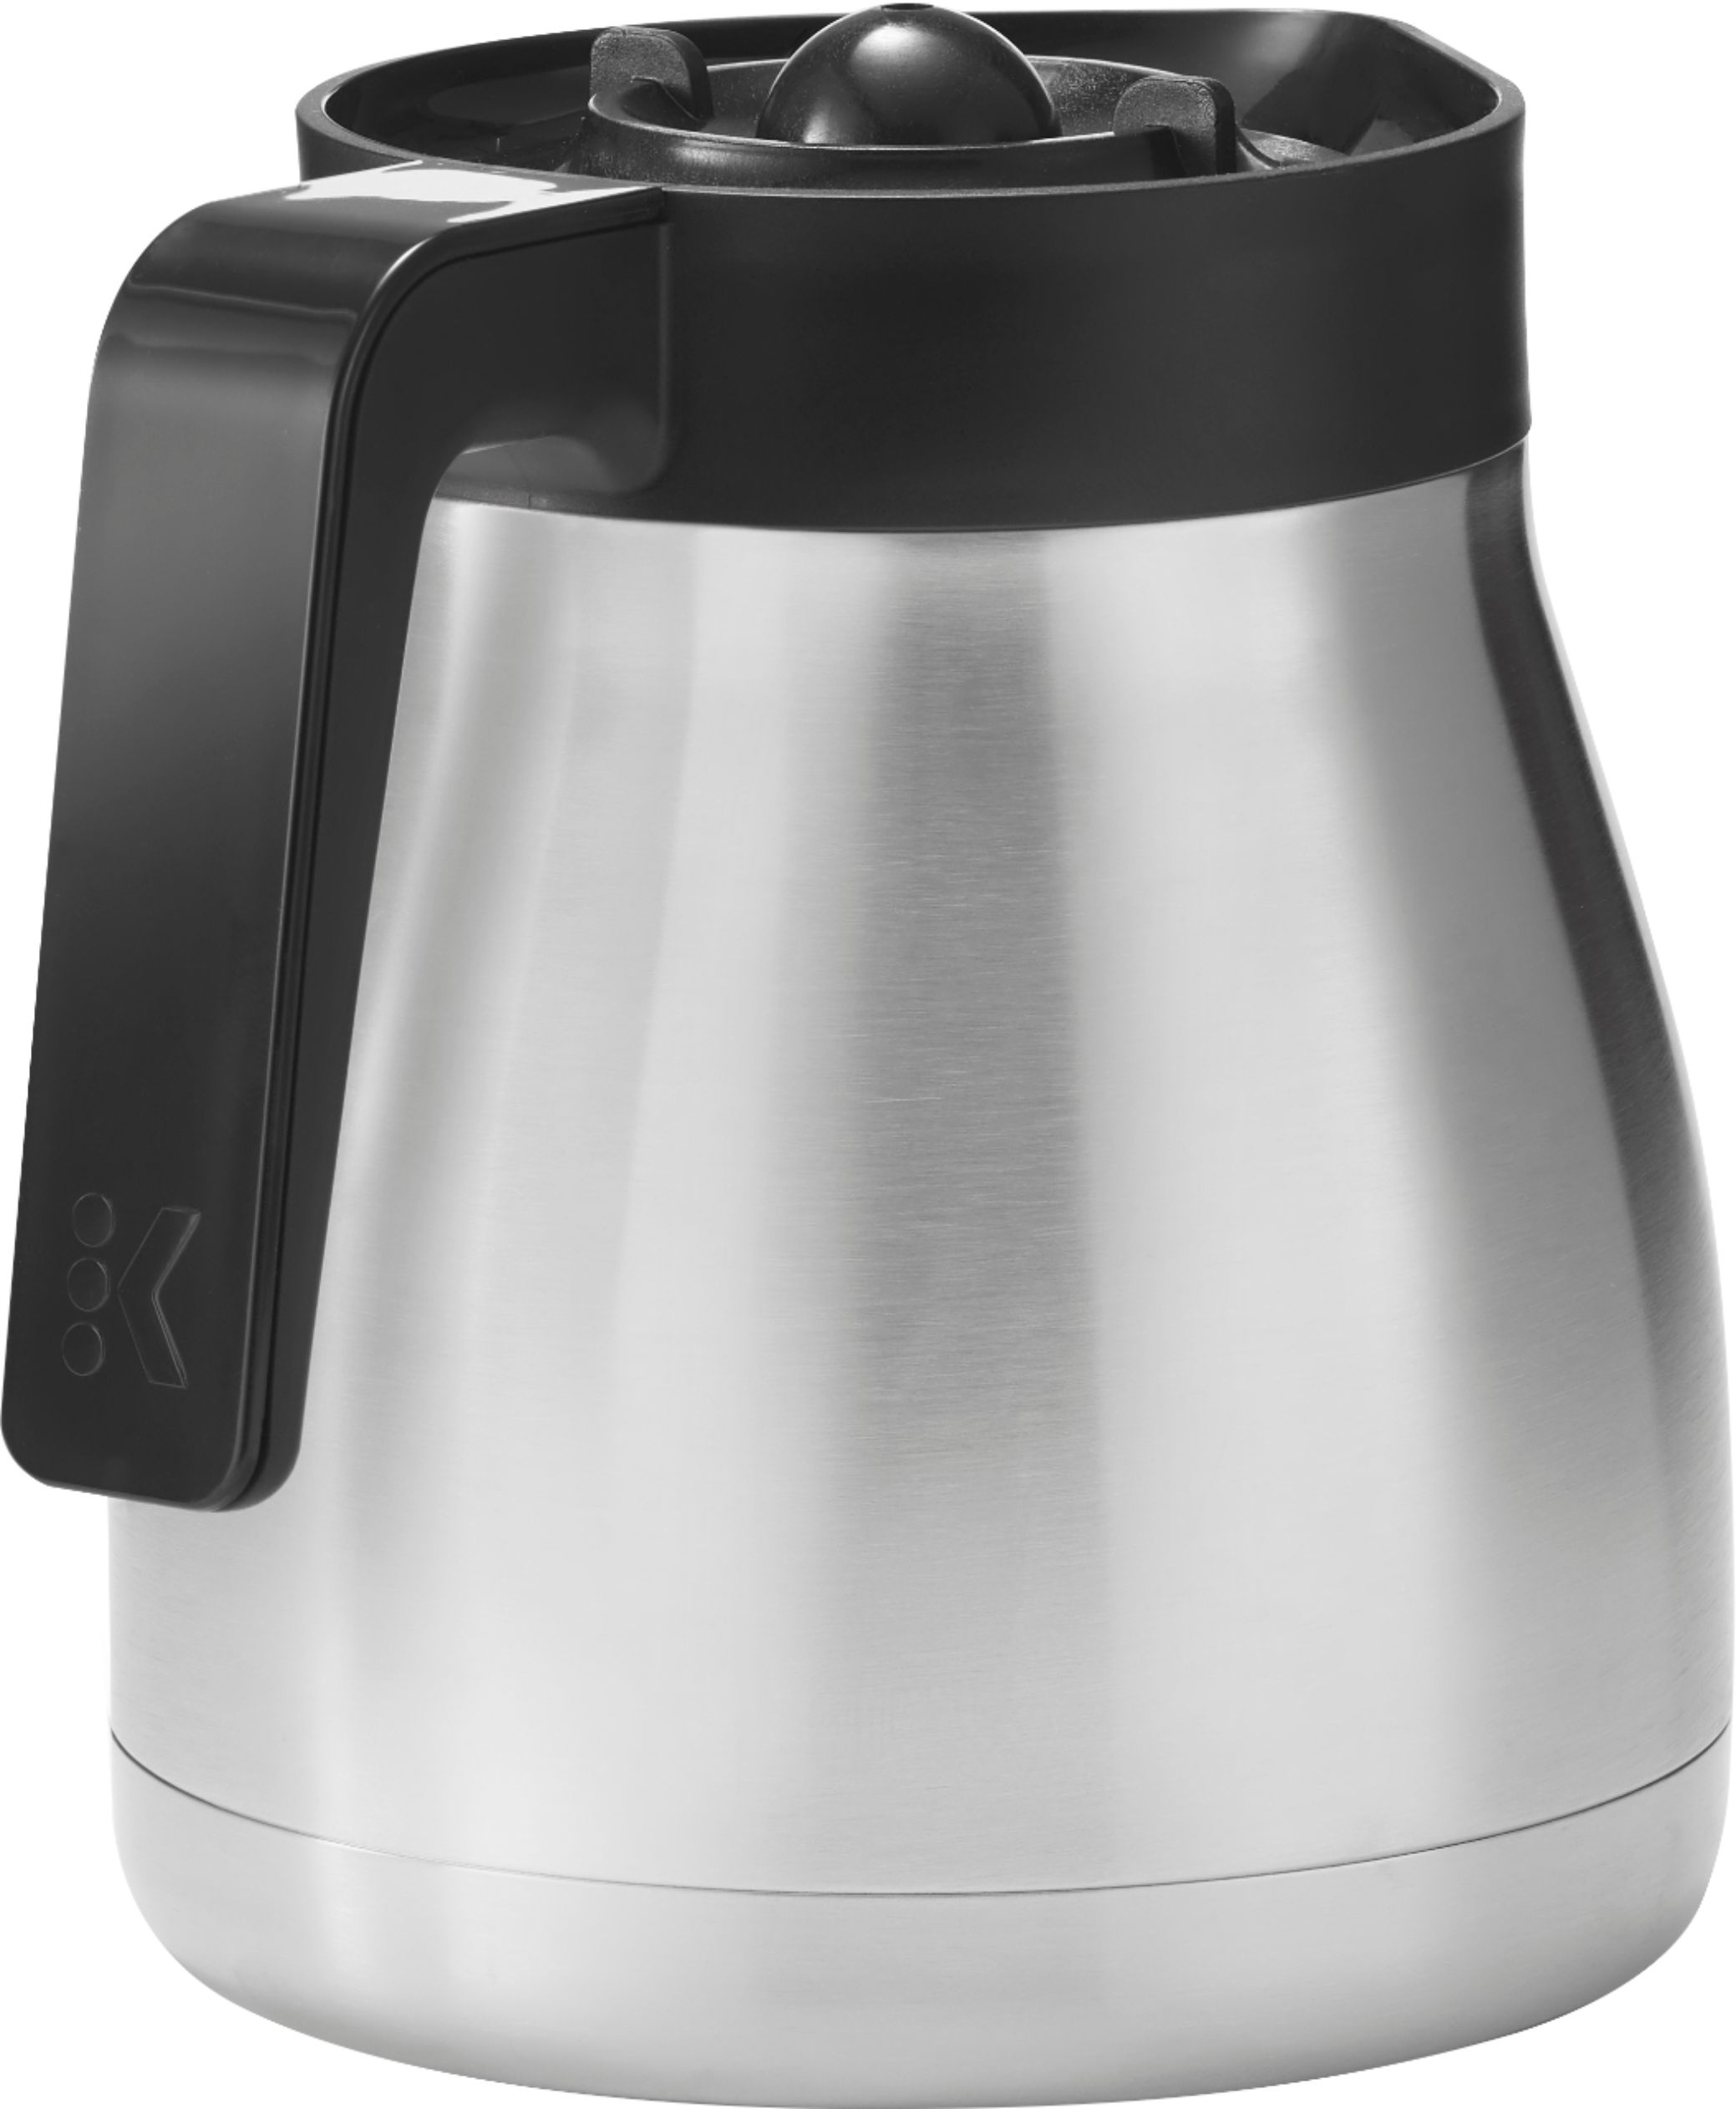 Keurig K Duo Special Edition Single Serve K-Cup Pod Coffee Maker Silver  5000362326 - Best Buy